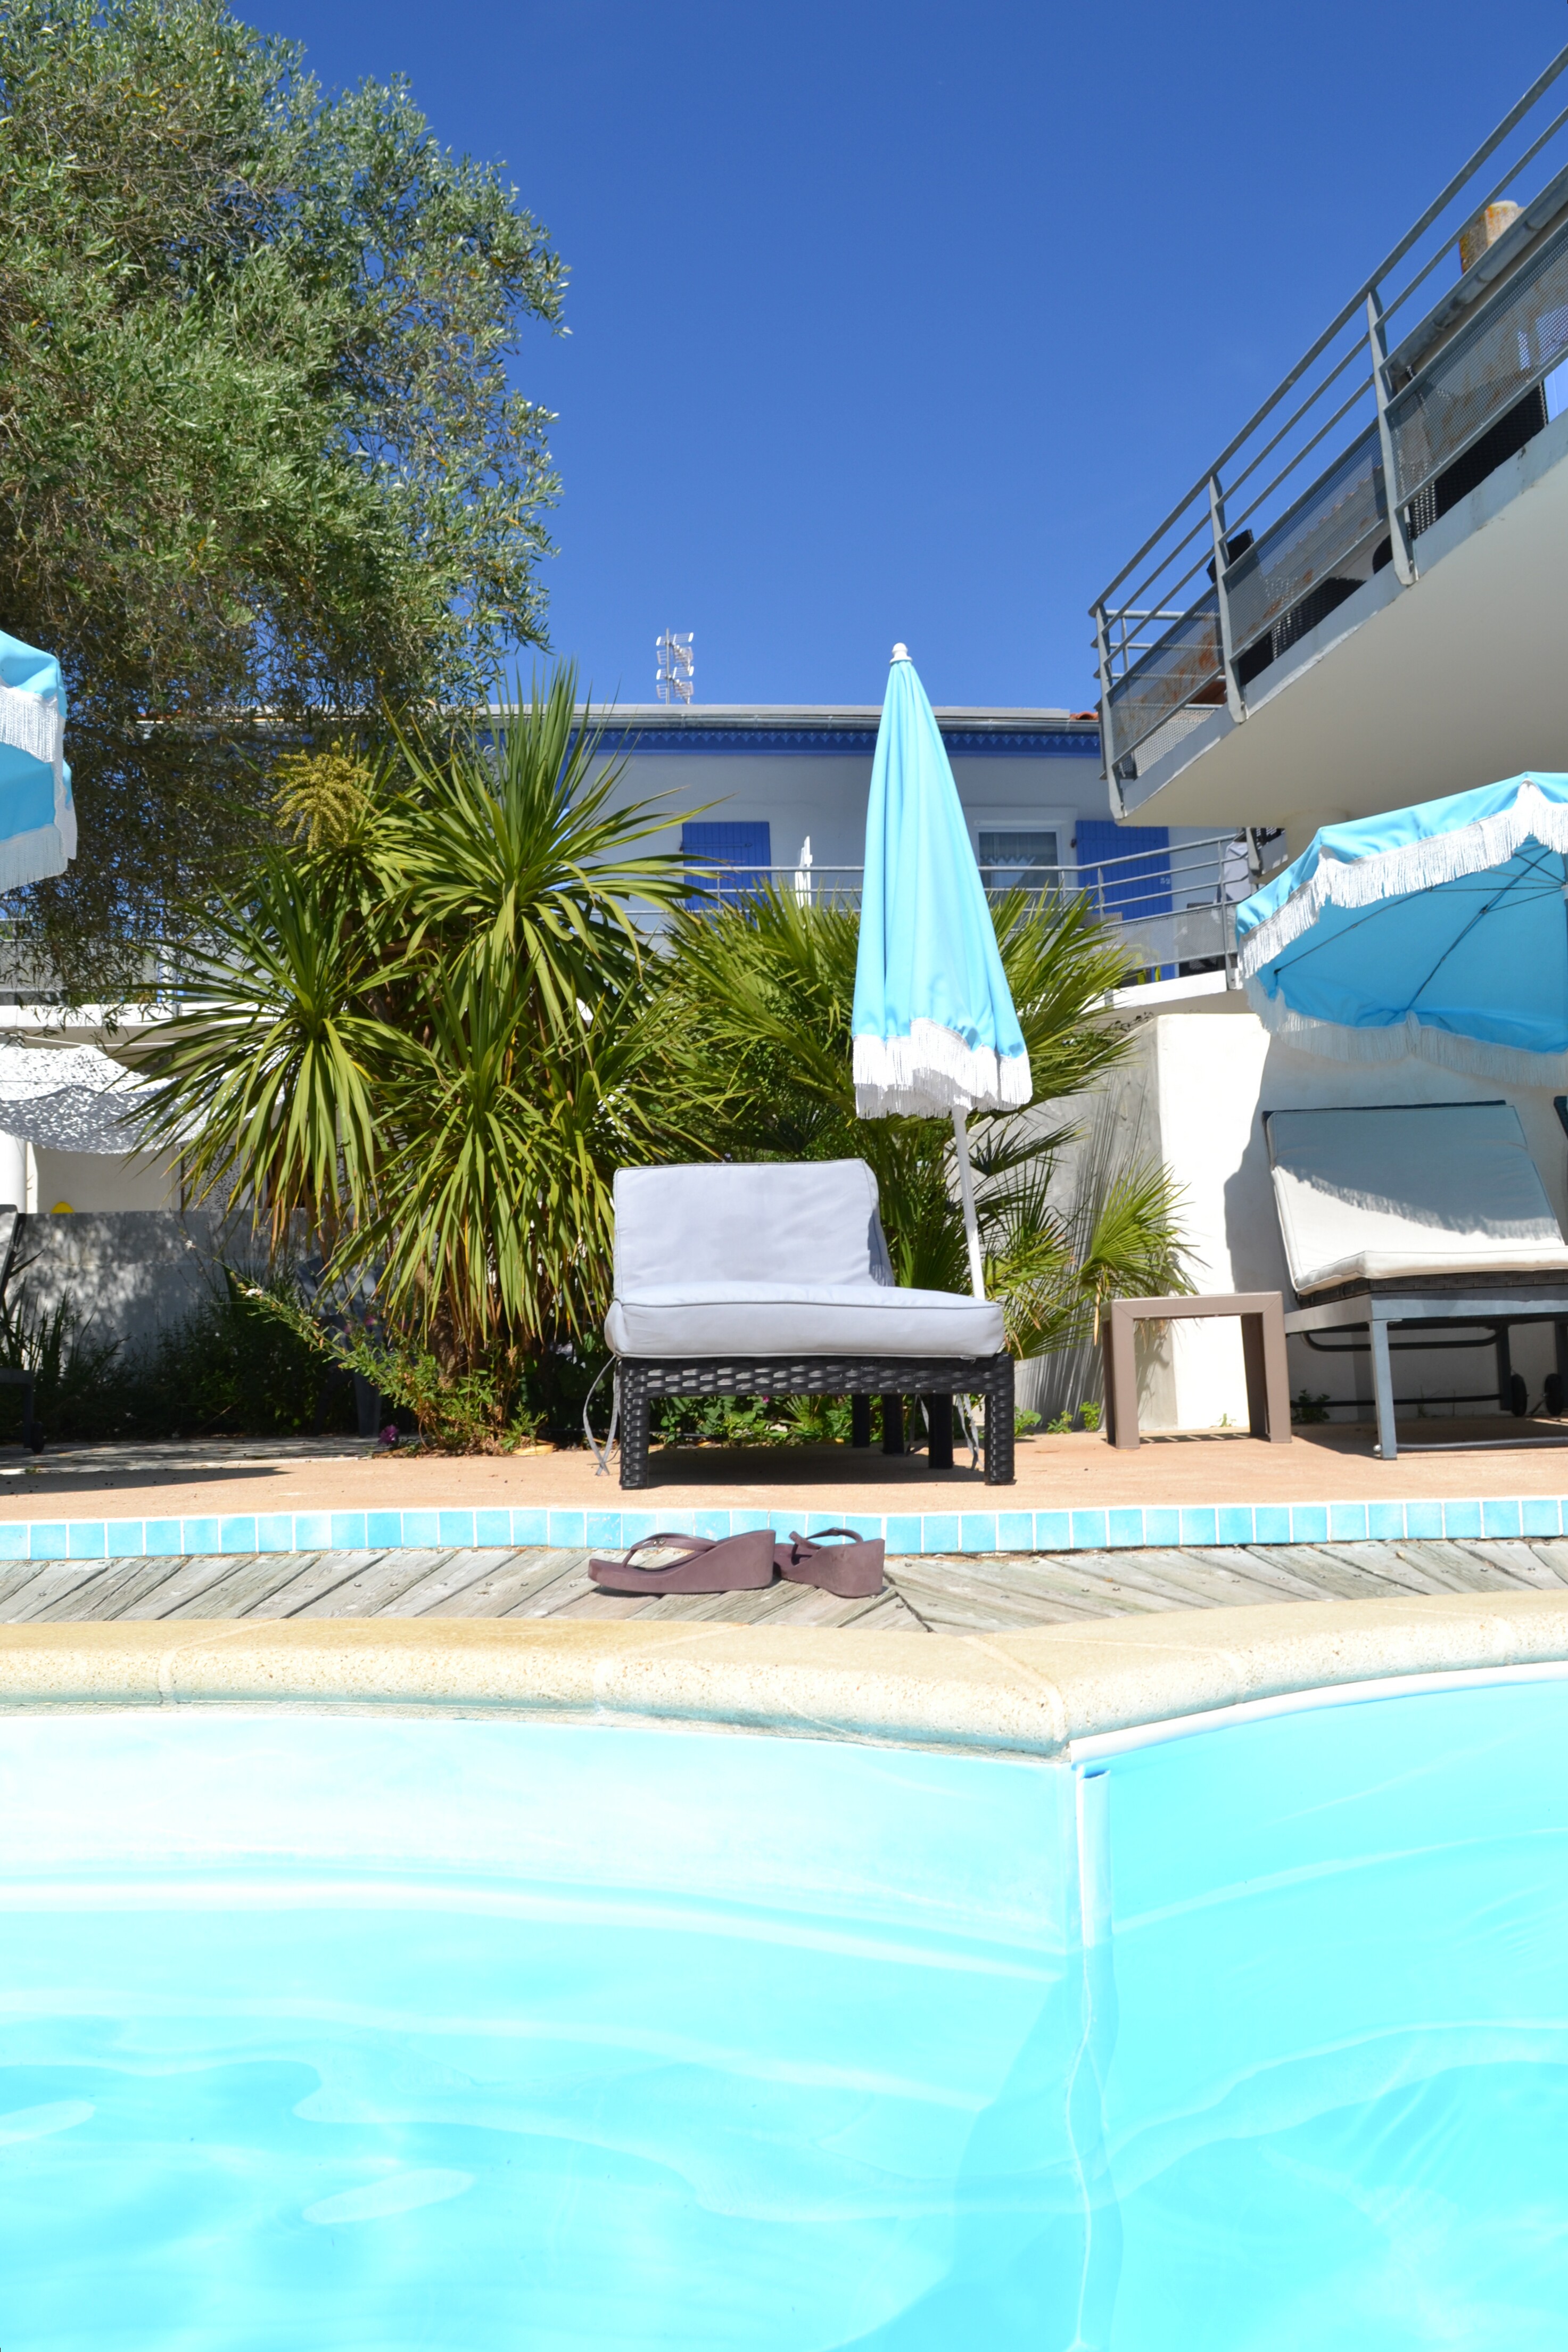 Atlantic hotel - oleron island - 3 stars hotel - swimming-pool